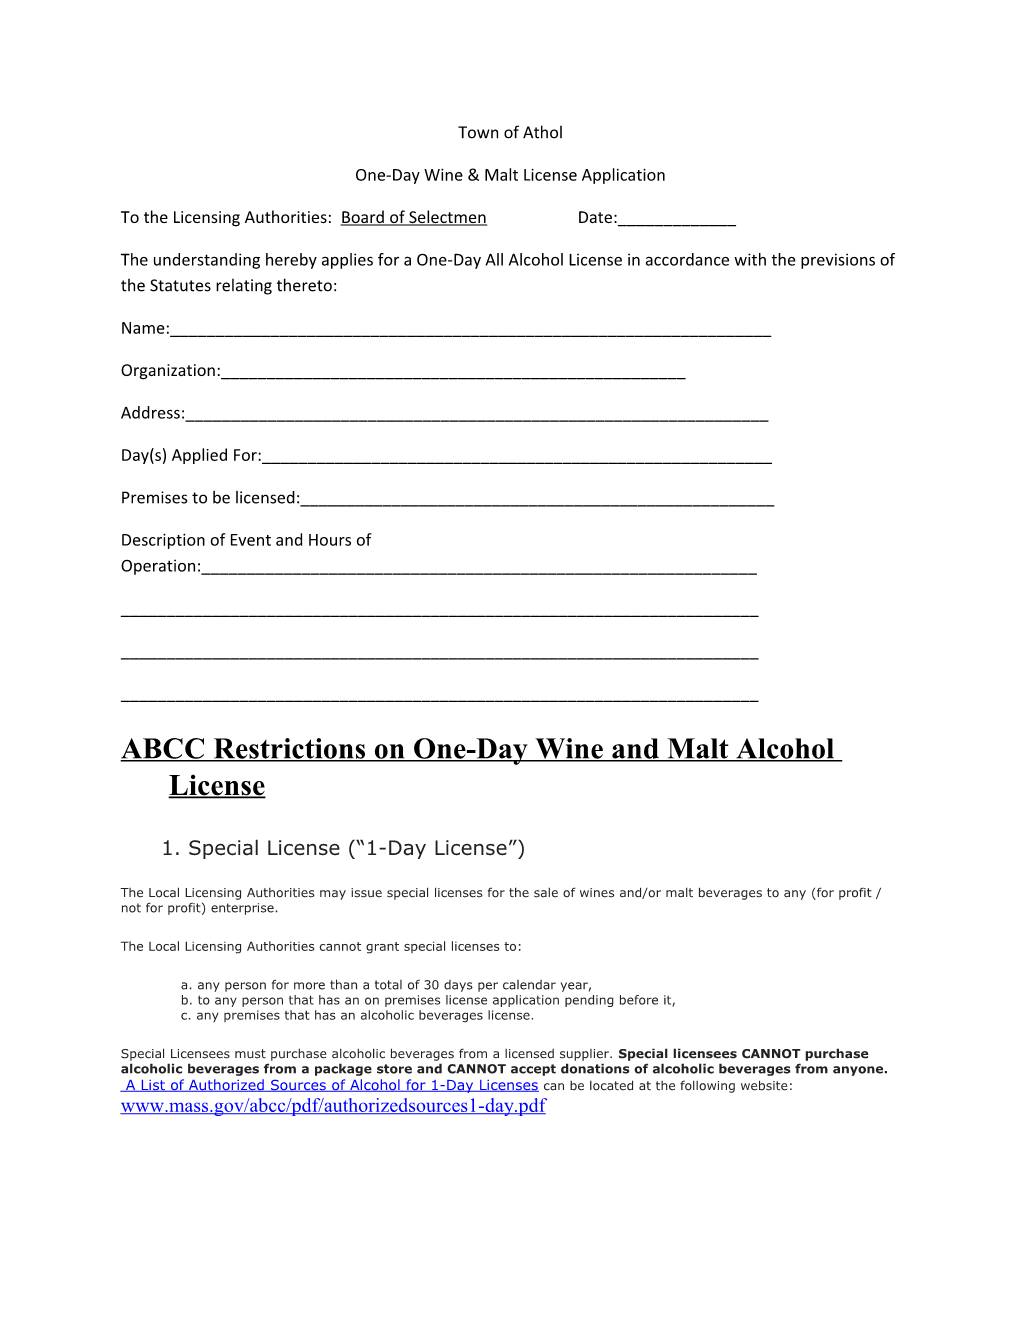 One-Day Wine & Malt License Application